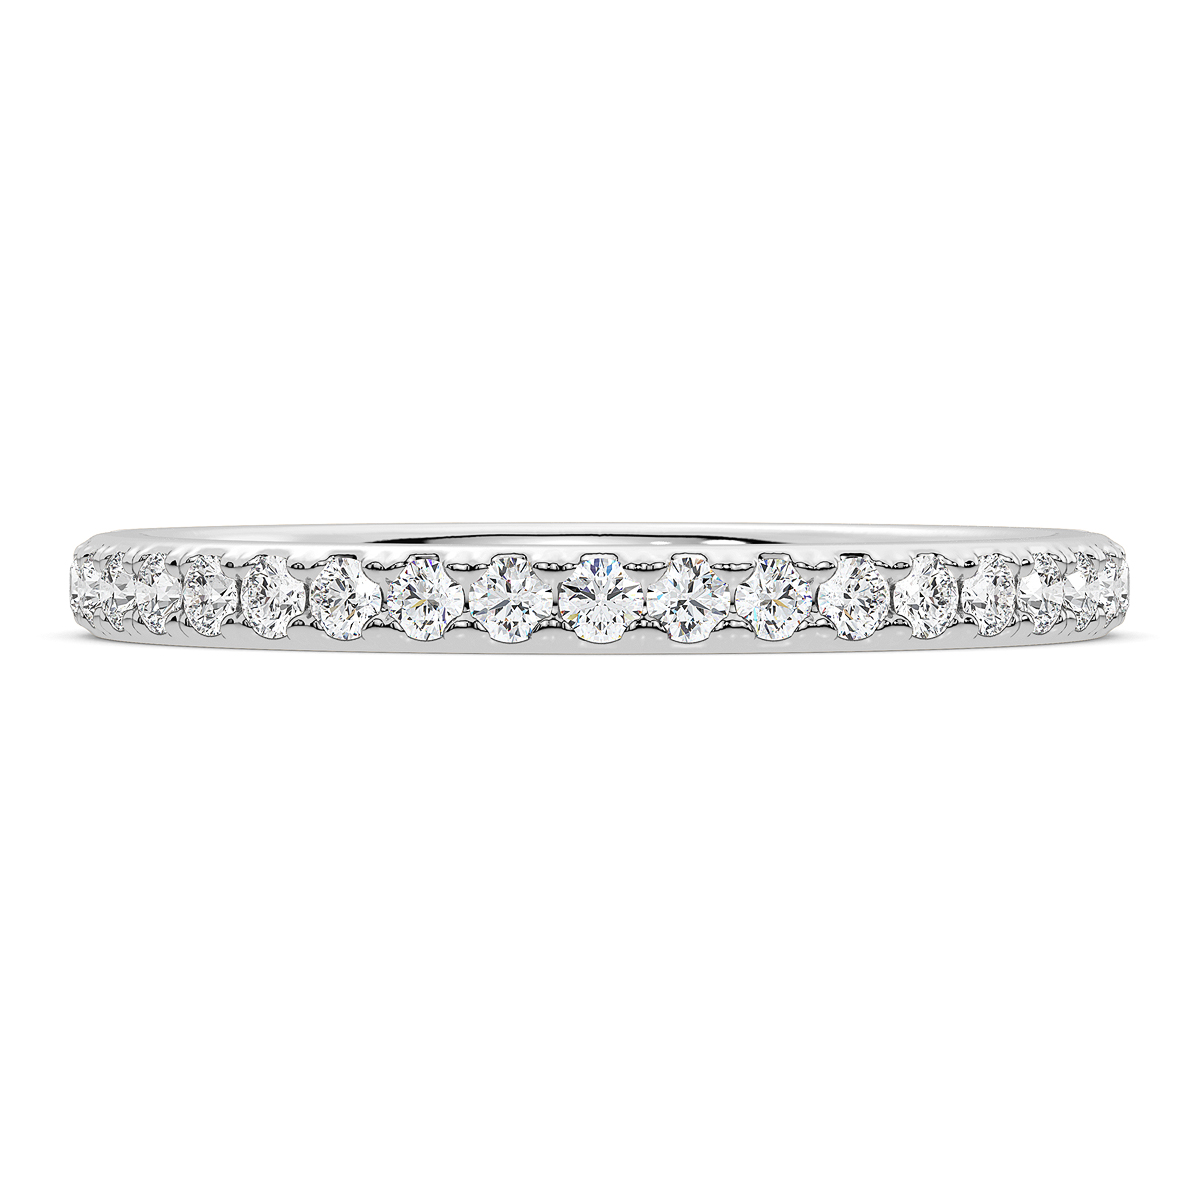 PROMESSA 950 Platinum Ring - 92335R | Chow Sang Sang Jewellery